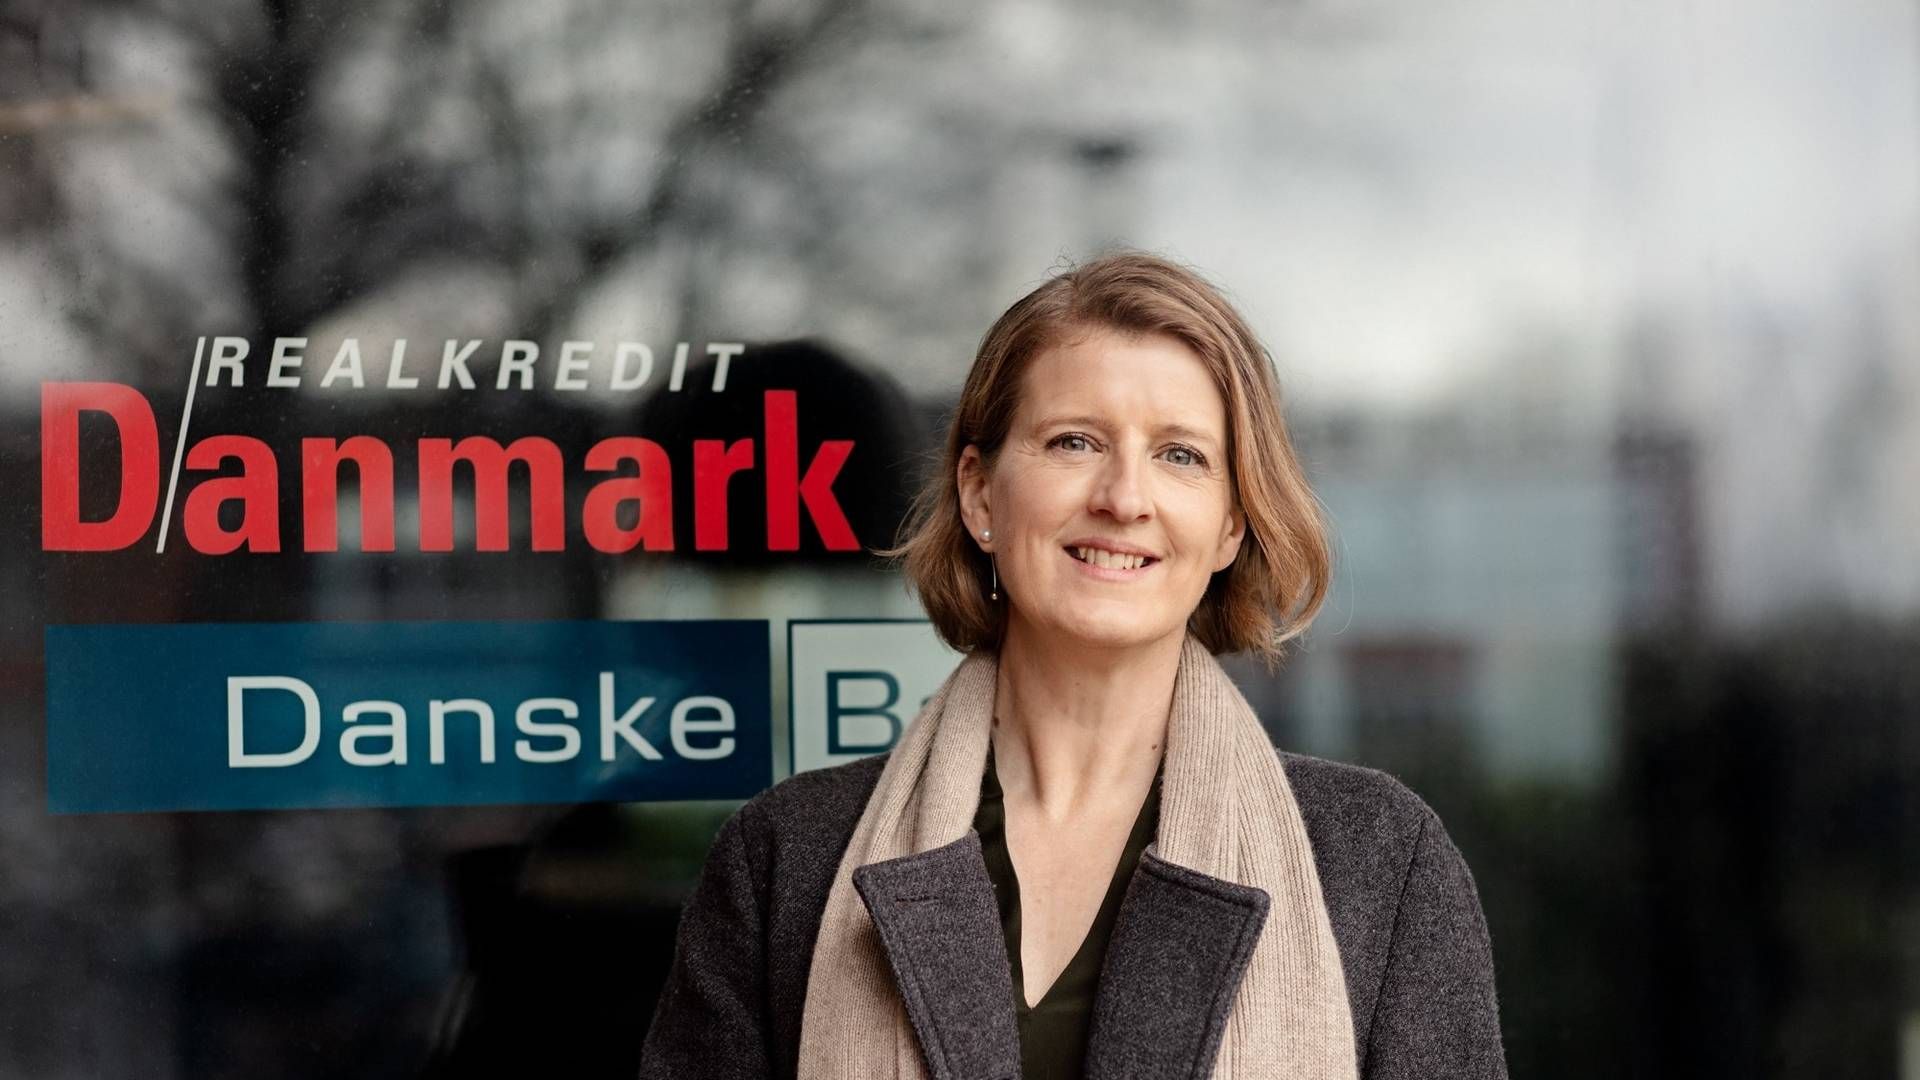 Adm. direktør i Realkredit Danmark, Kamilla Hammerich Skytte. | Foto: PR/Realkredit Danmark